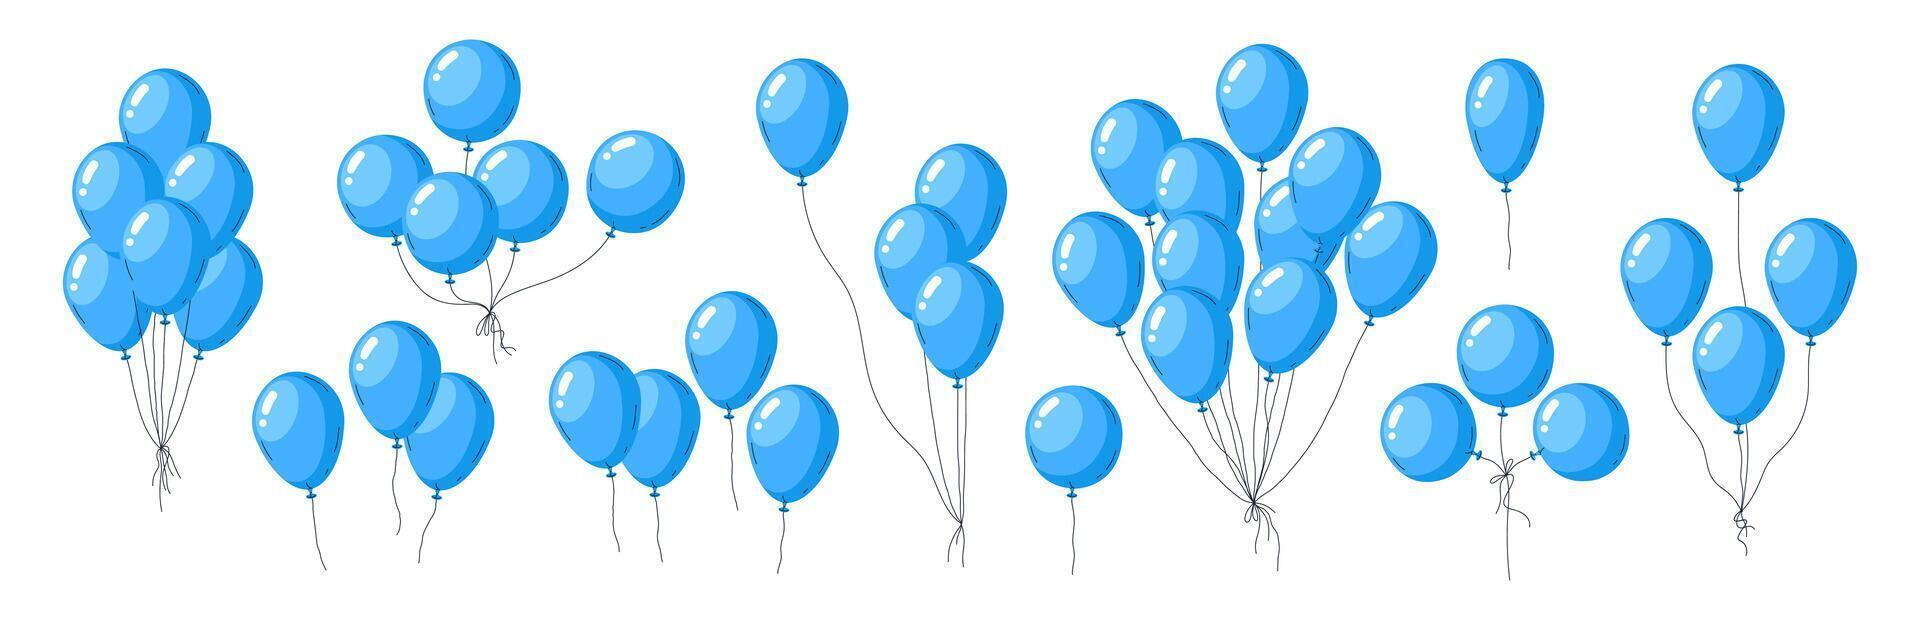 blauw helium ballonnen. drijvend ballon trossen, blauw glanzend lucht ballonnen verjaardag partij decoraties vlak illustratie set. vliegend ballonnen verzameling vector